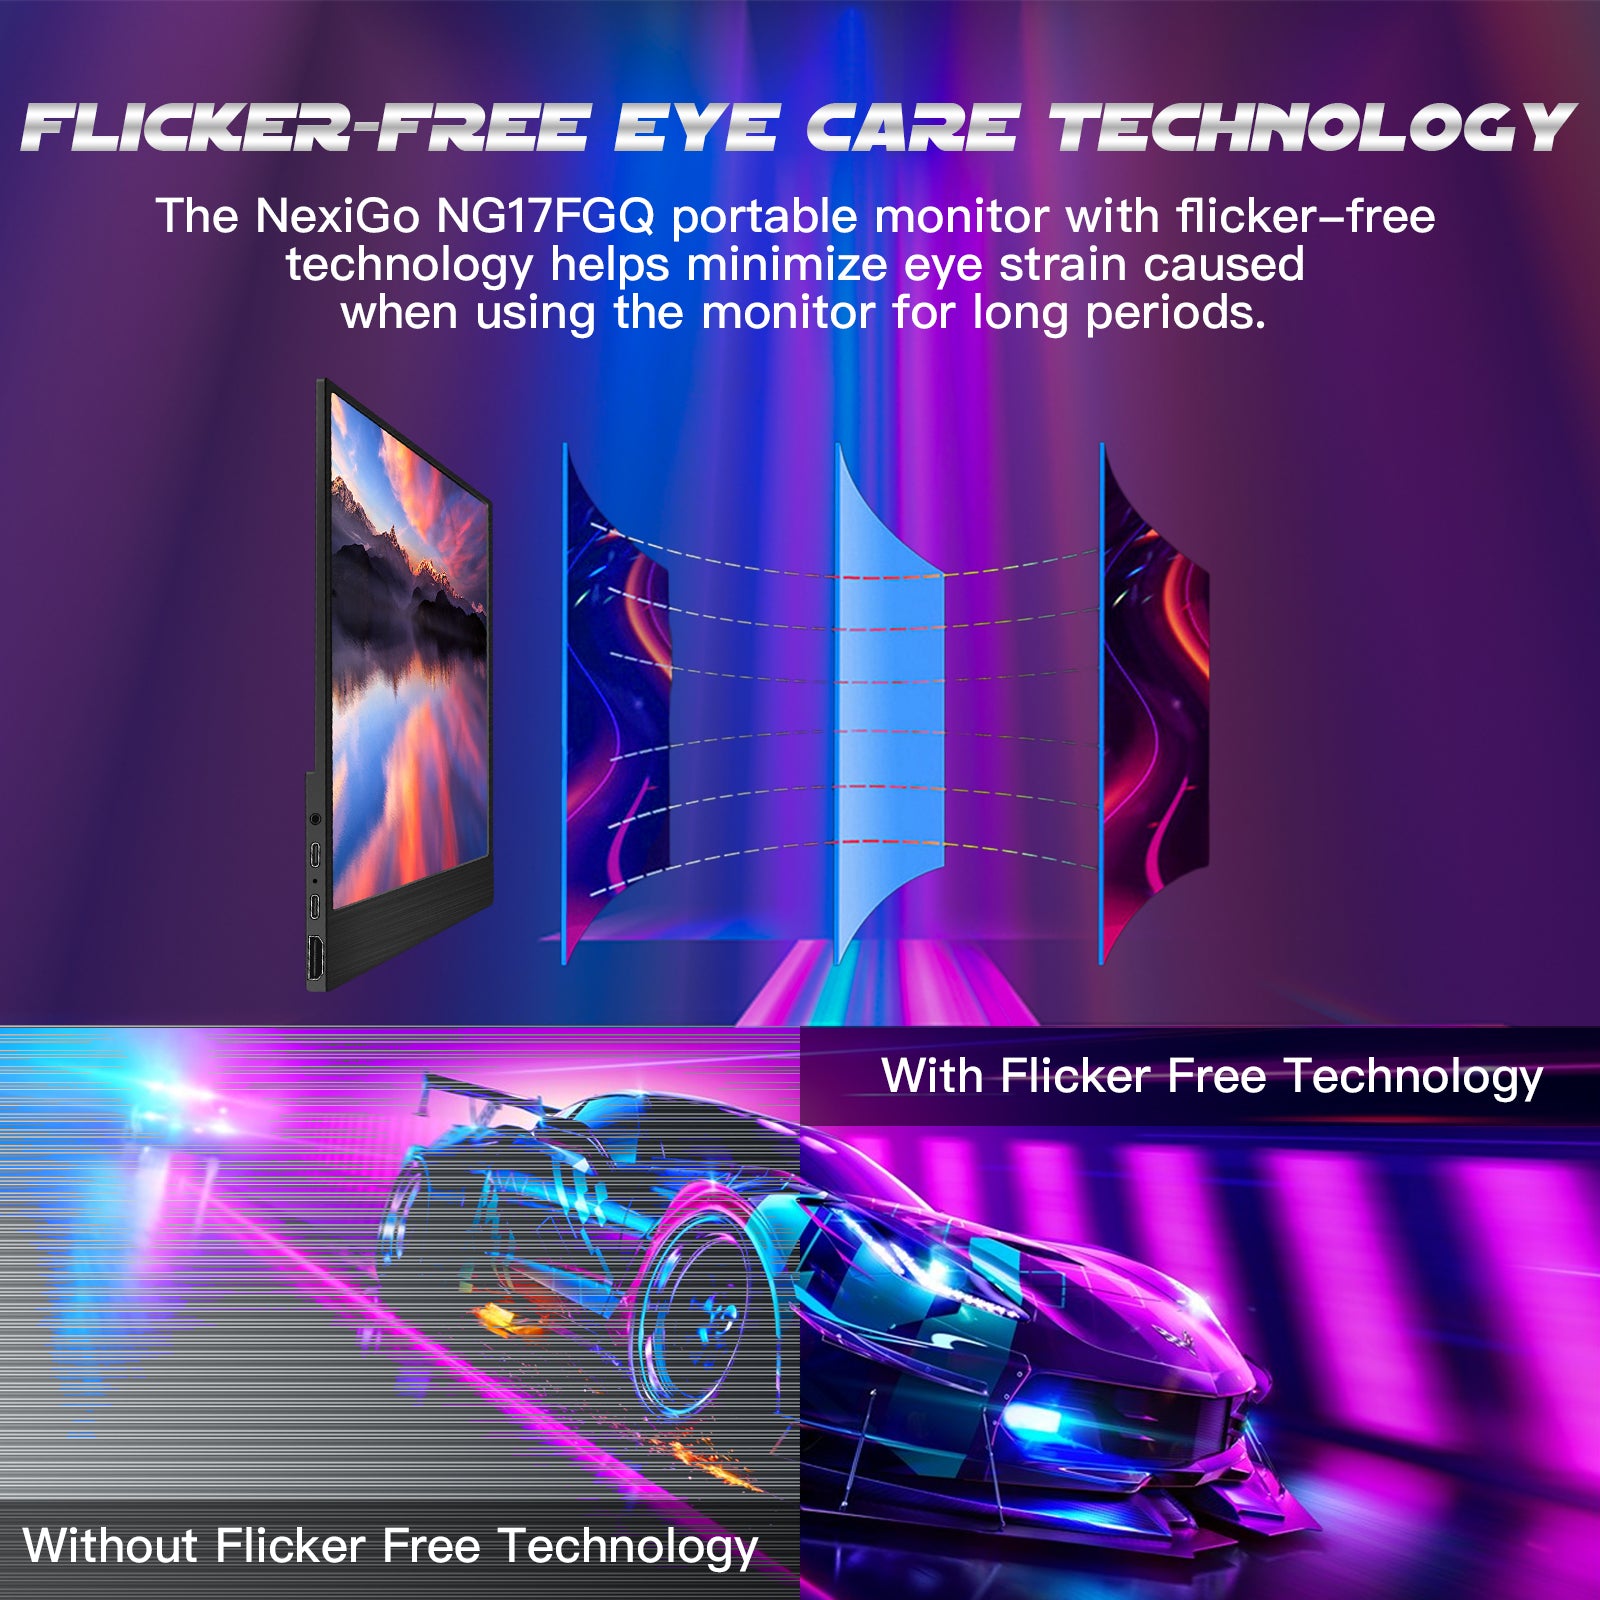 Portable monitor with flicker-free technology minimizes eye strain.